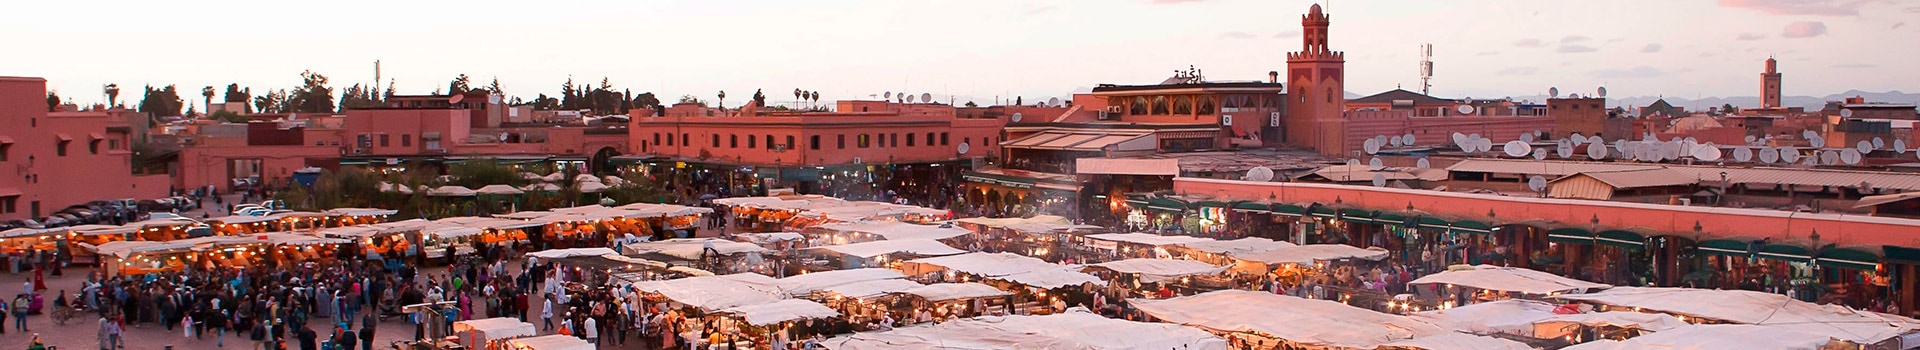 Geneve - Marrakech